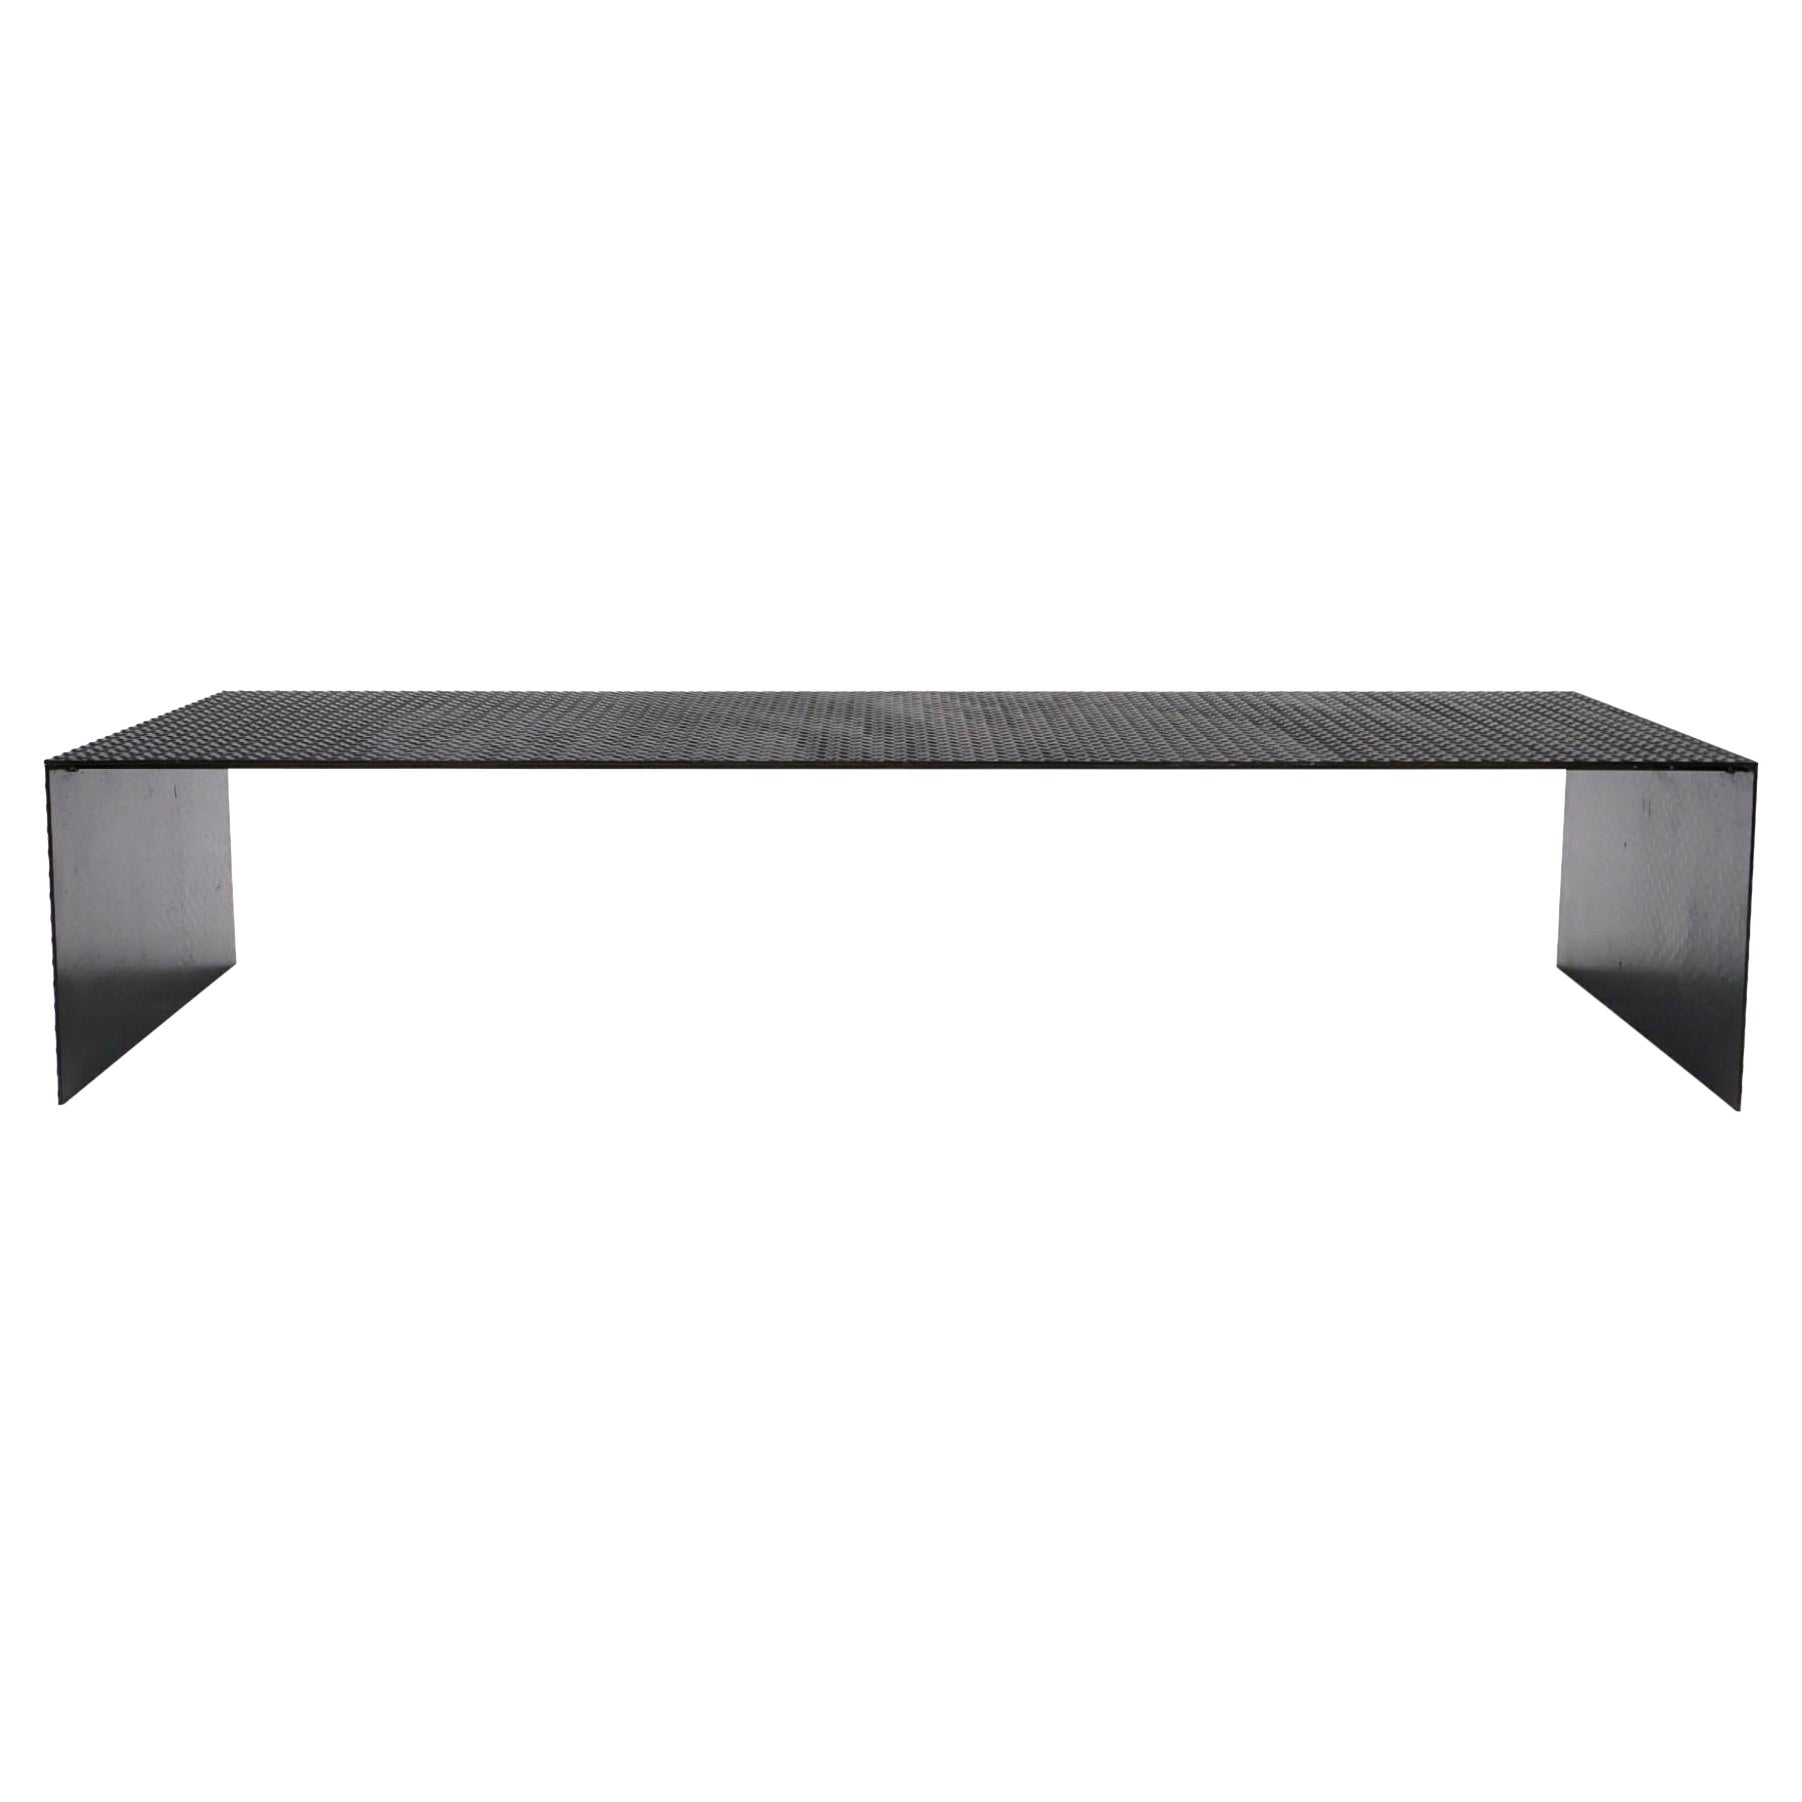 Large Diamond Plate Steel Bench / Coffee Table, Dark Charcoal, Custom Made